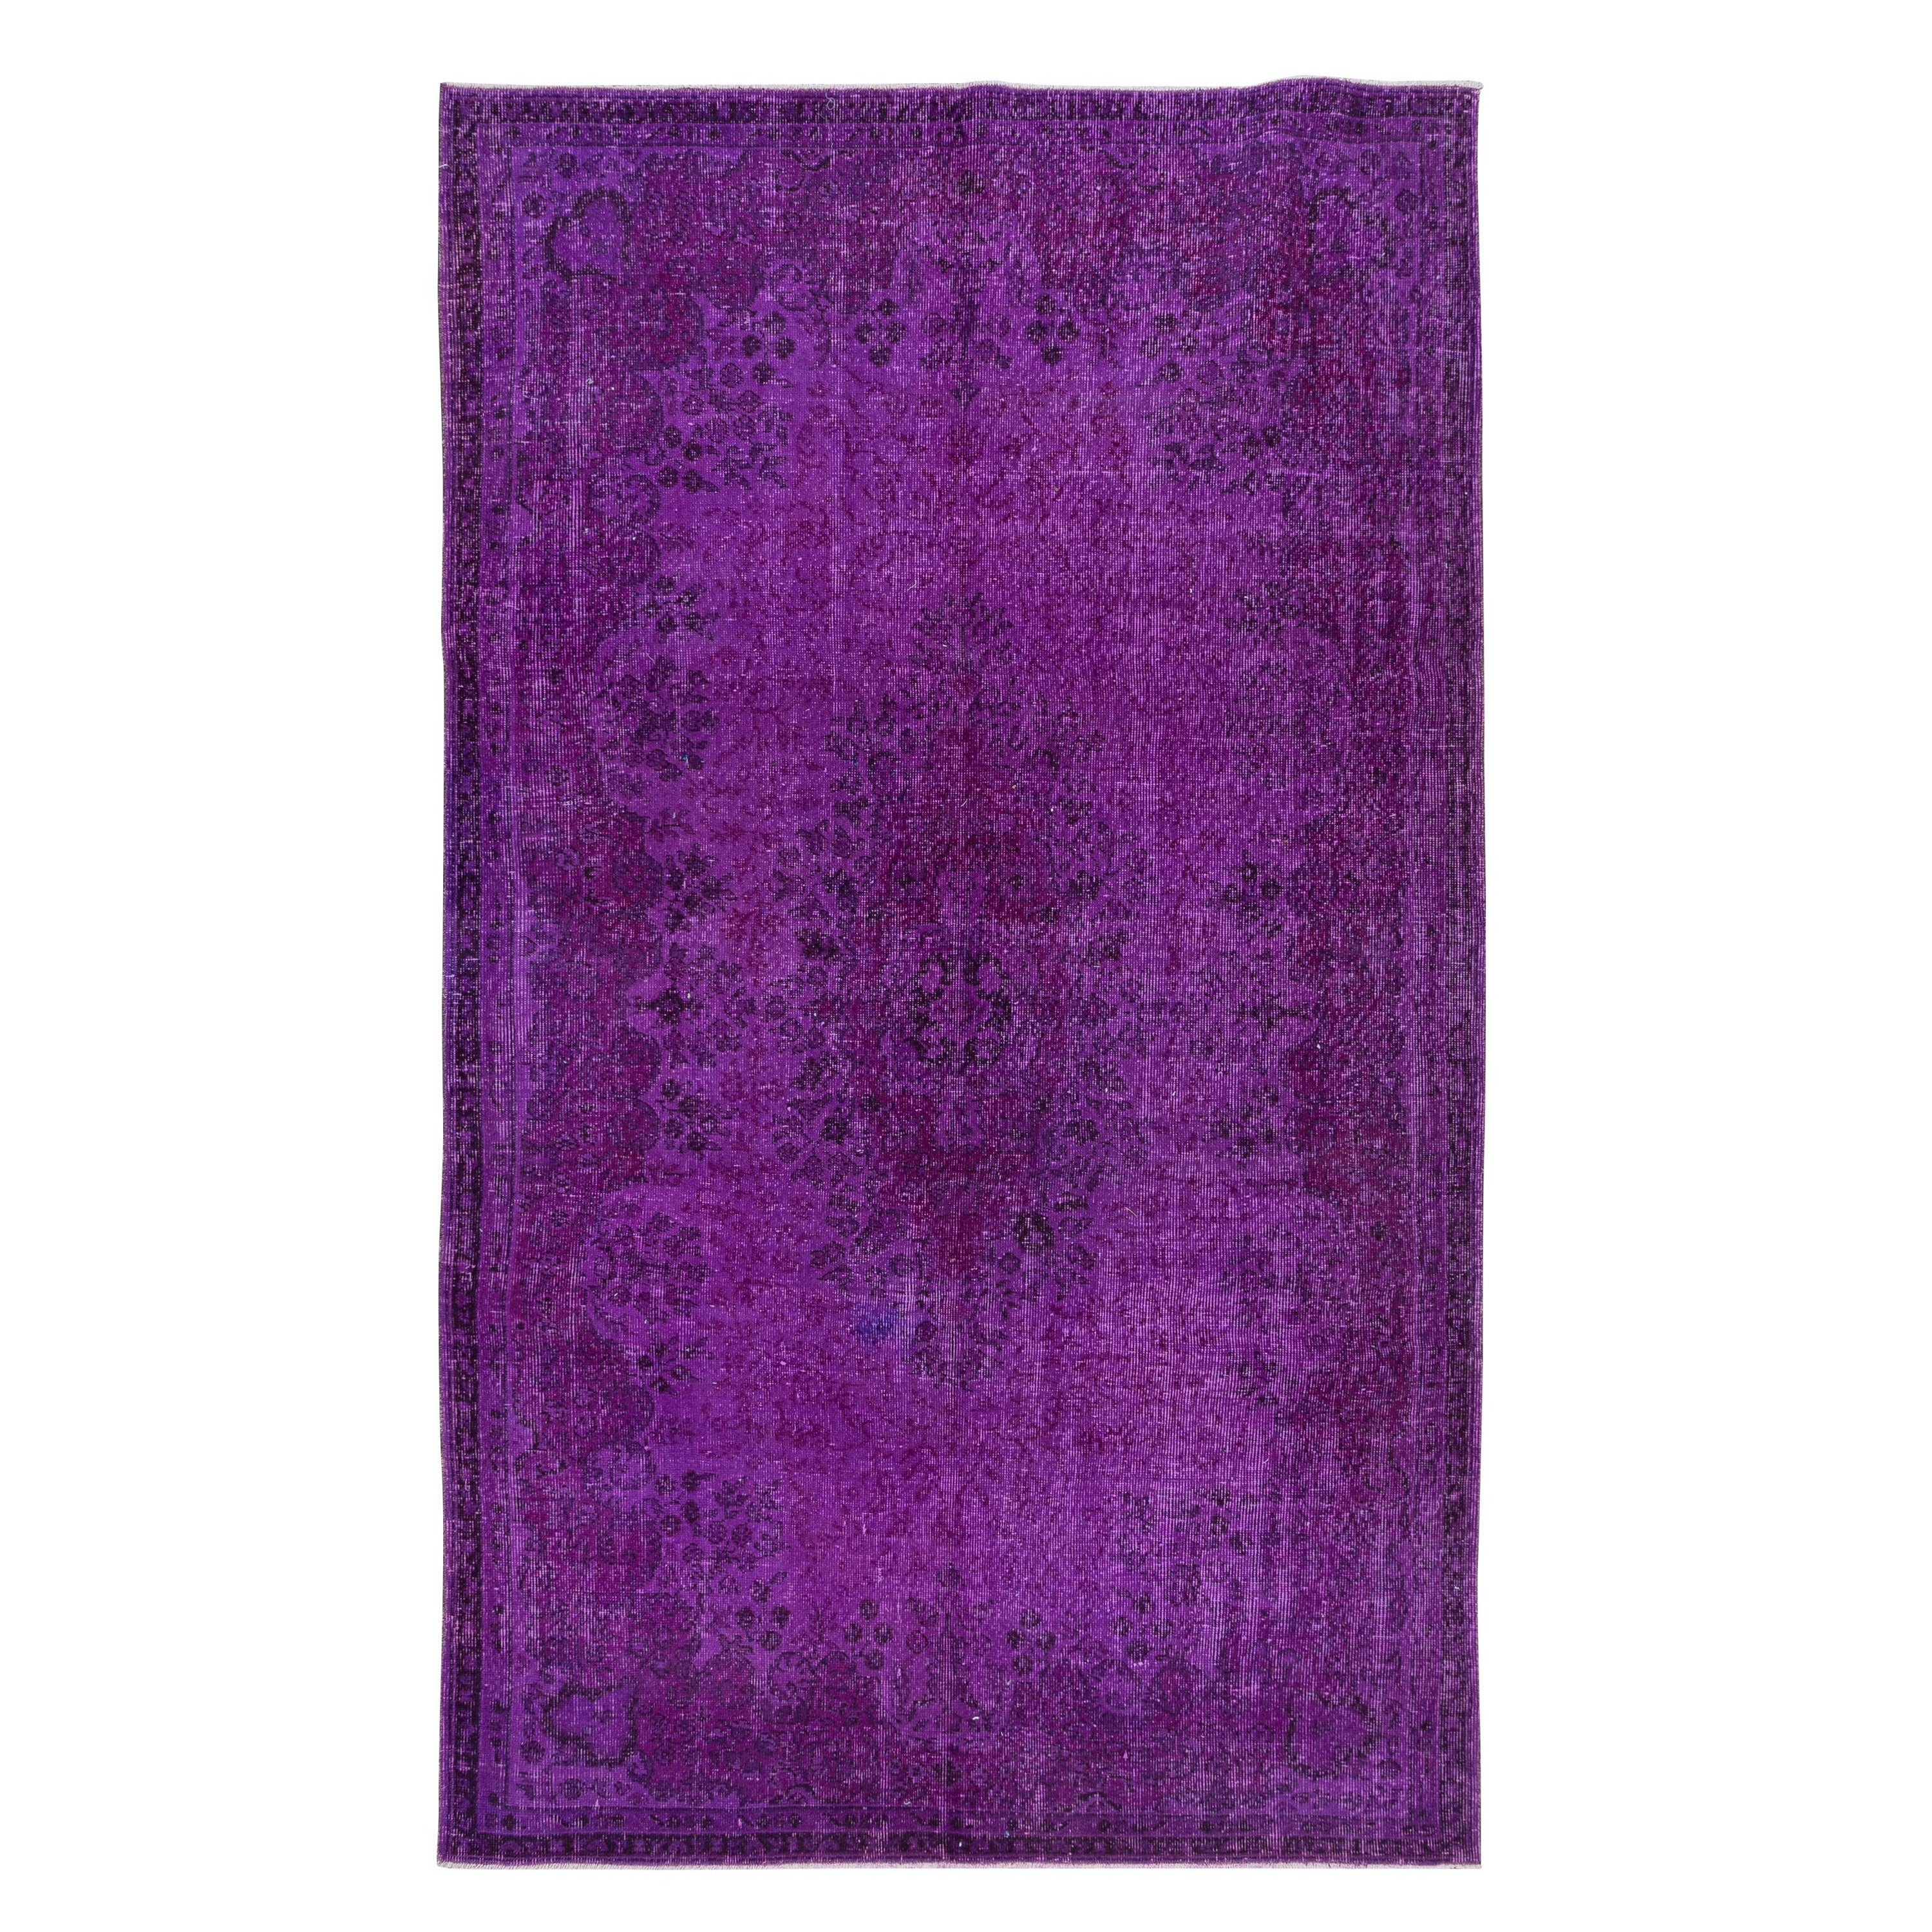 5.8x10 Ft Handmade Turkish Rug in Purple for Bedroom, Modern Living Room Carpet